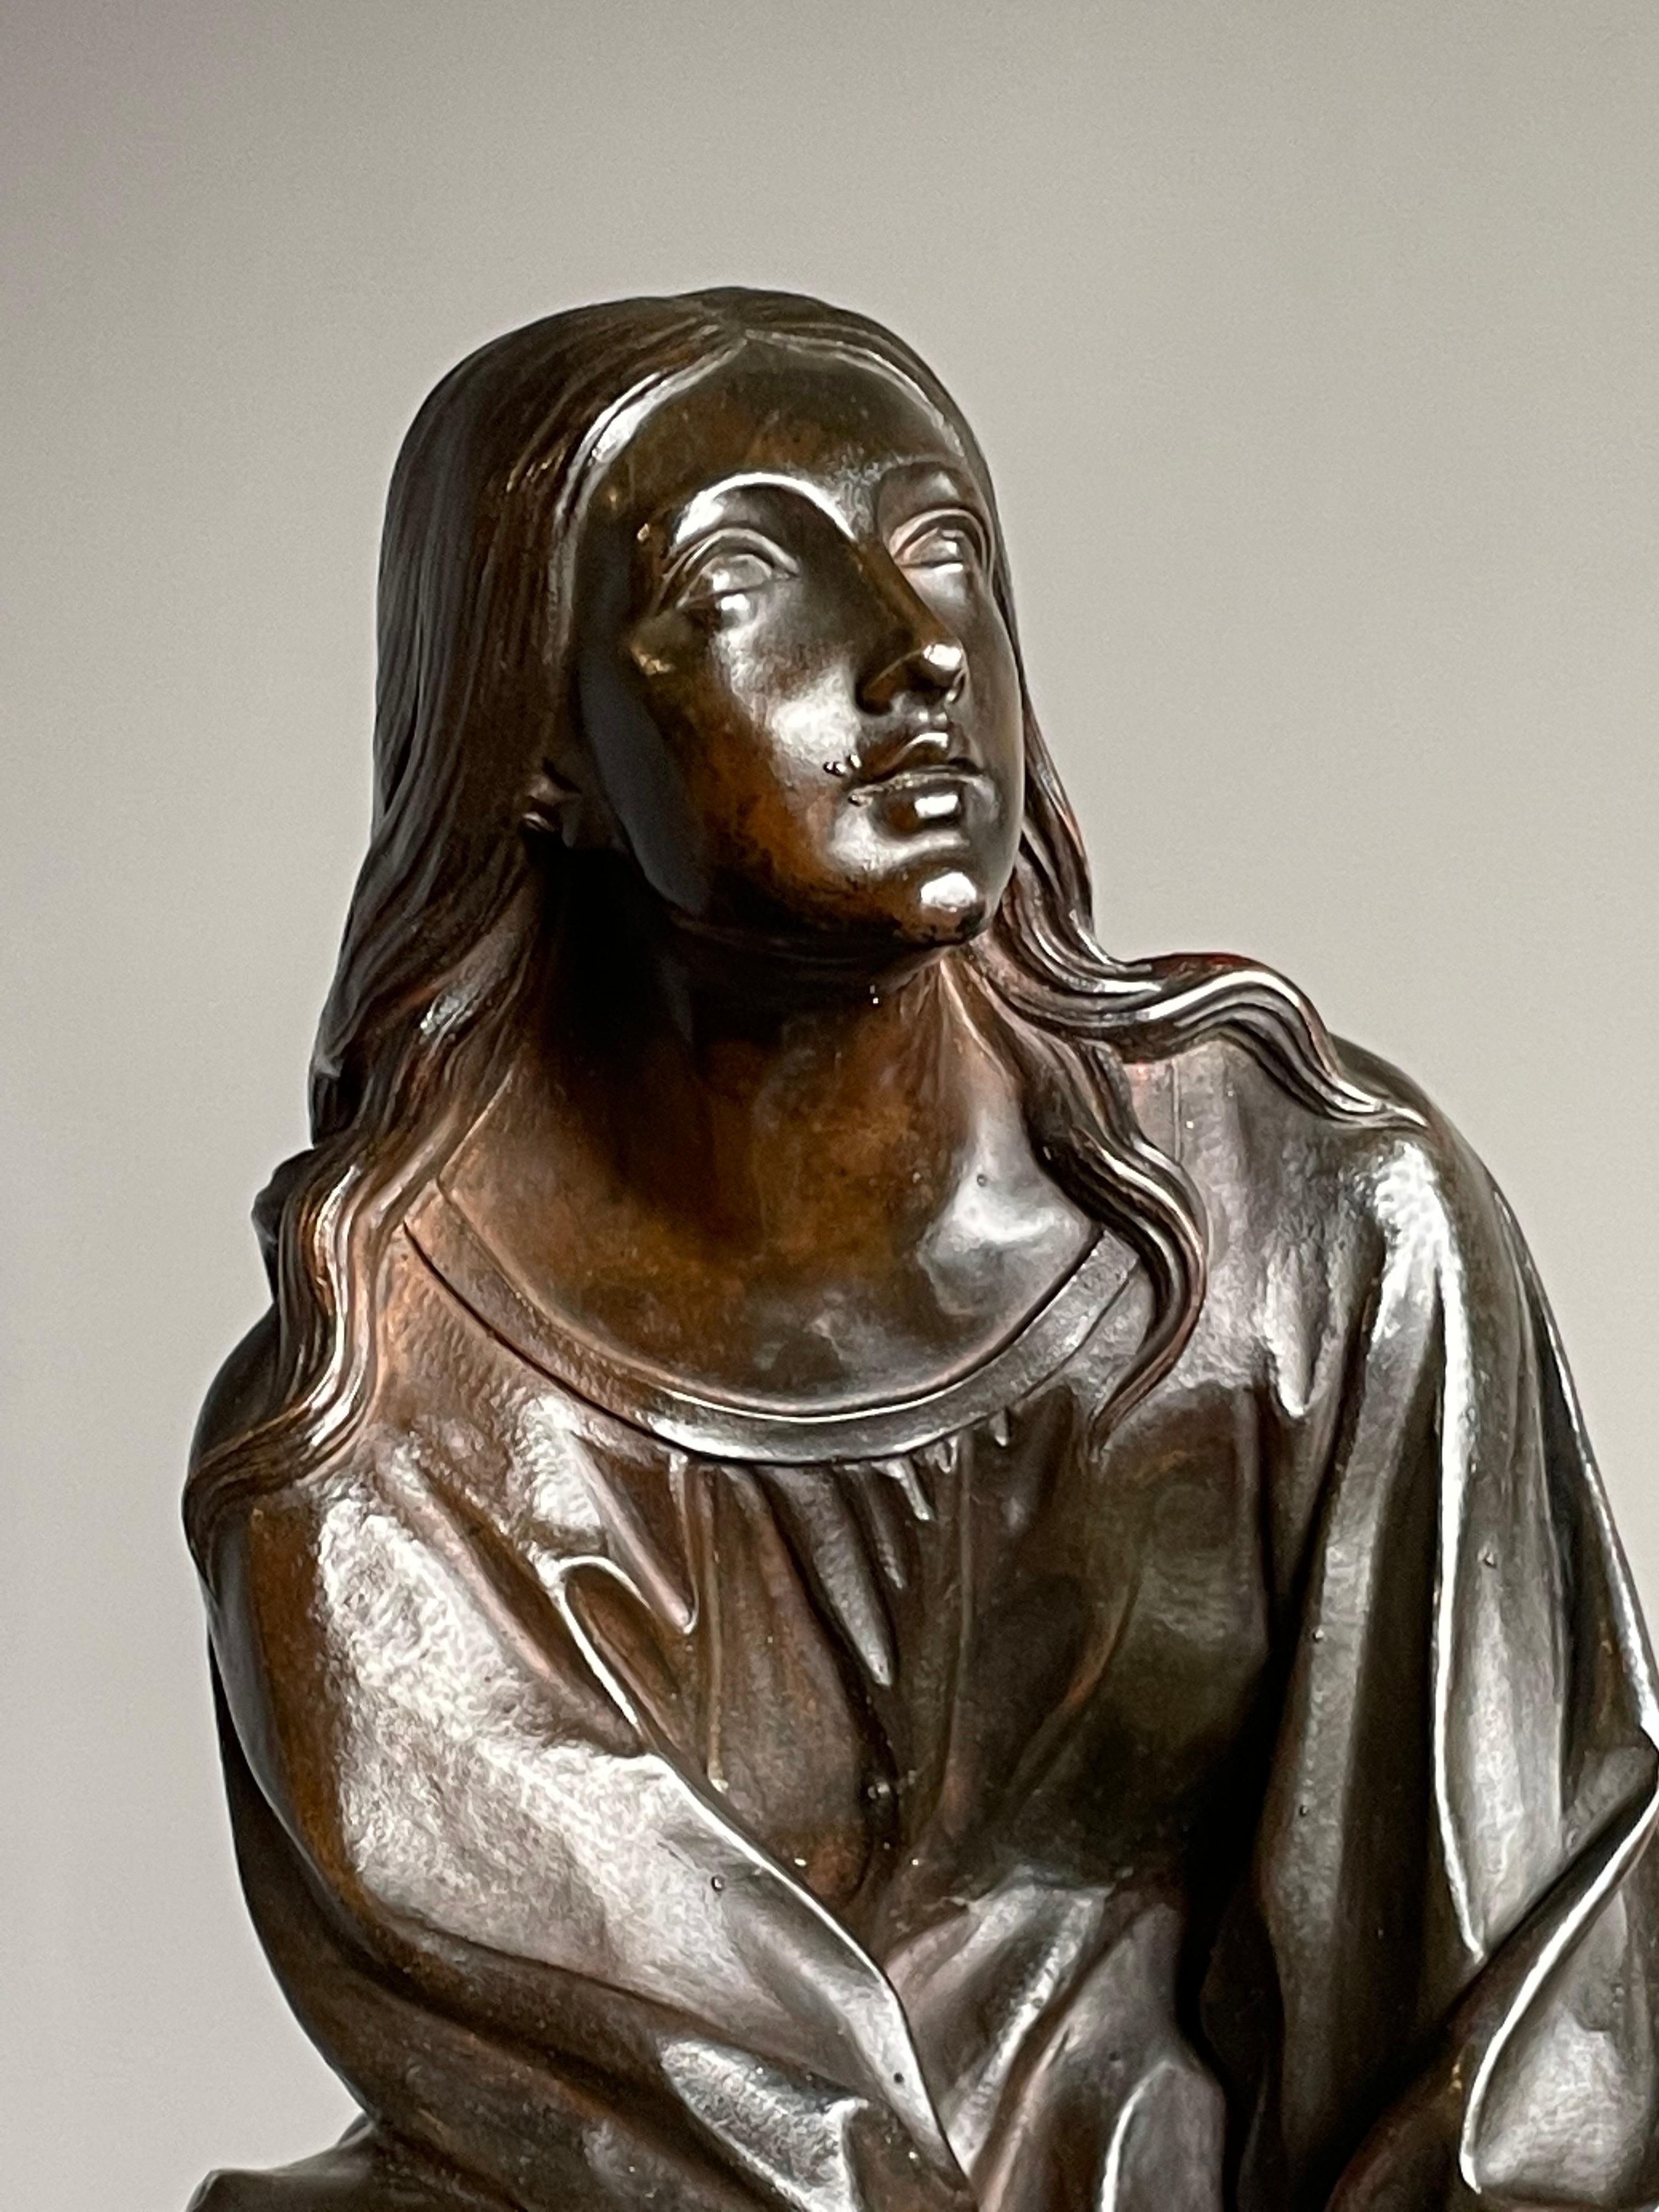 Antique & Stunning Bronze Kneeling Angel Sculpture Marked 1841 by T. Gechter For Sale 6